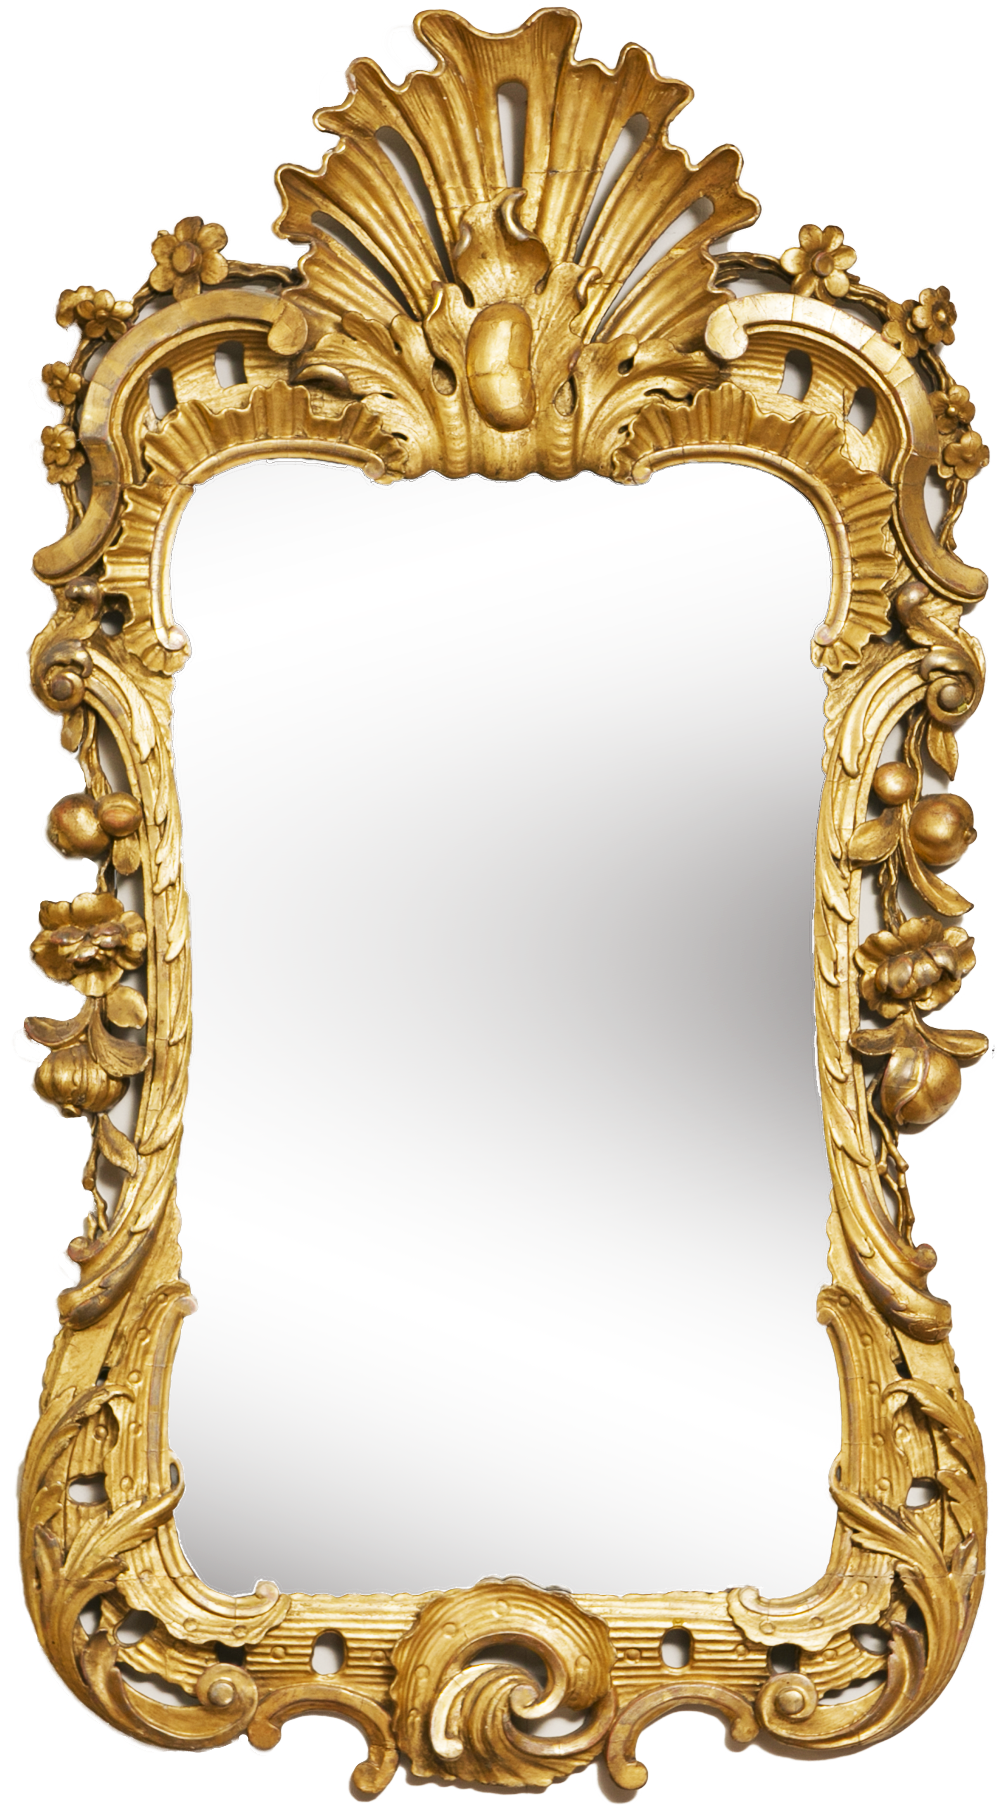 Mirror PNG Image - PurePNG | Free transparent CC0 PNG ...